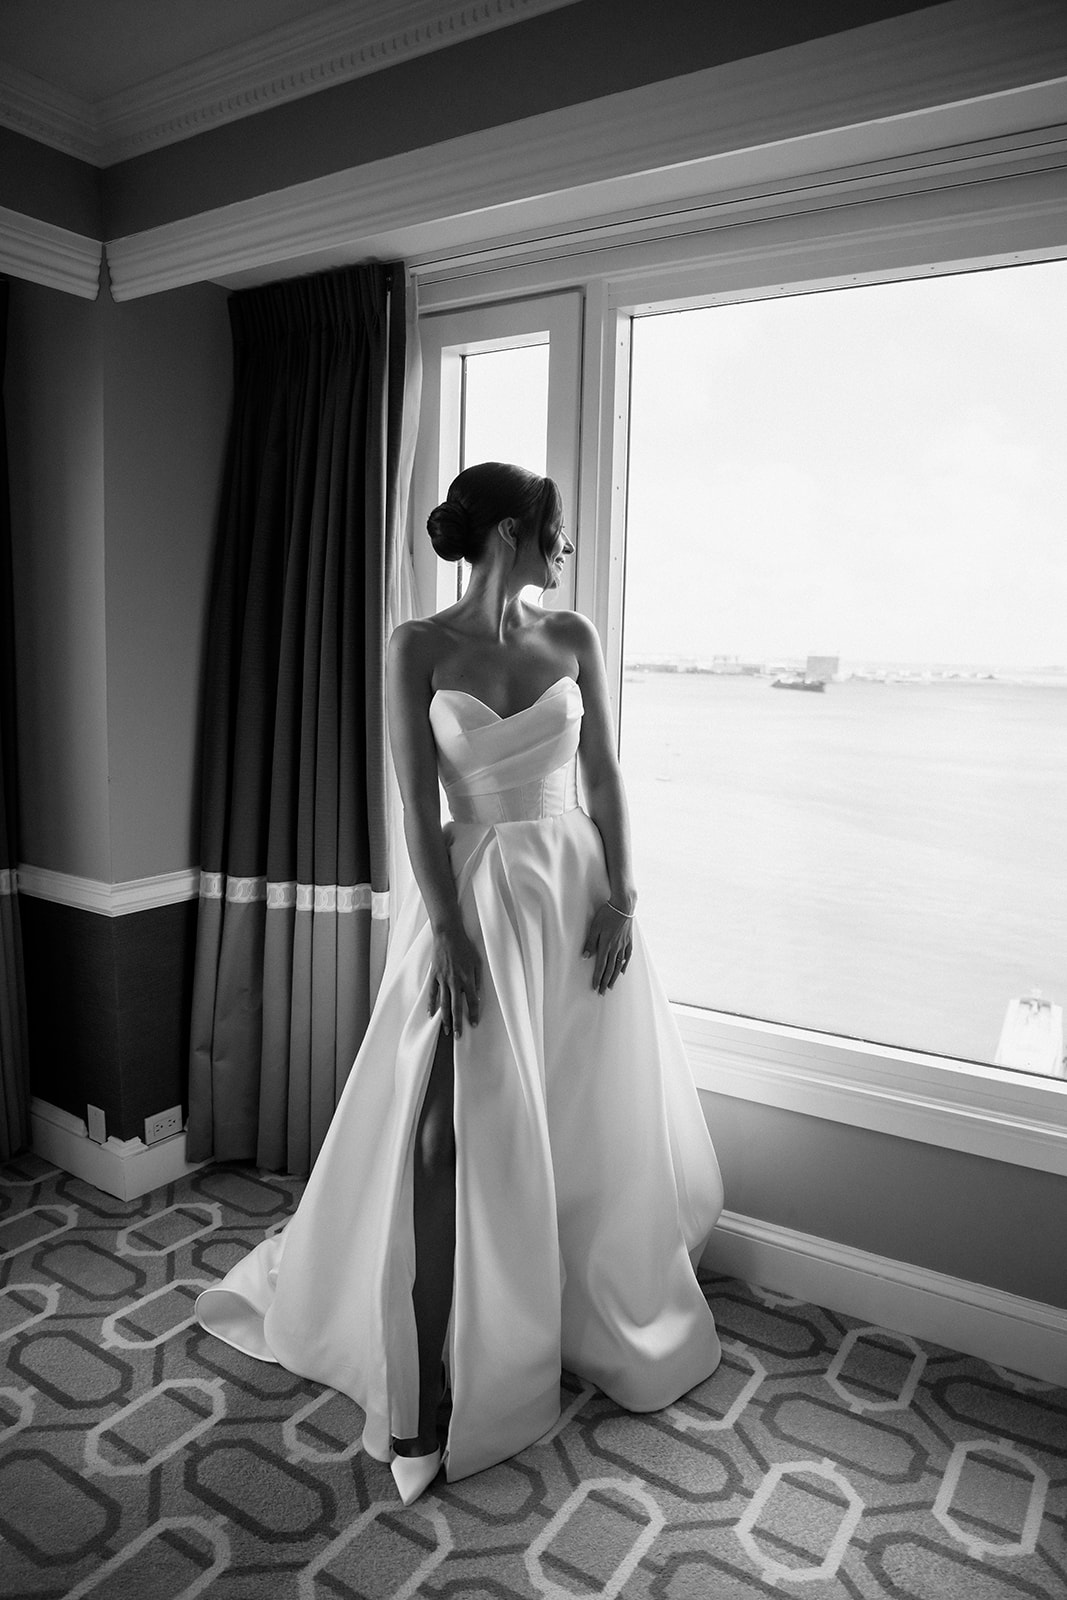 Black and white editorial hotel bridal portrait. 